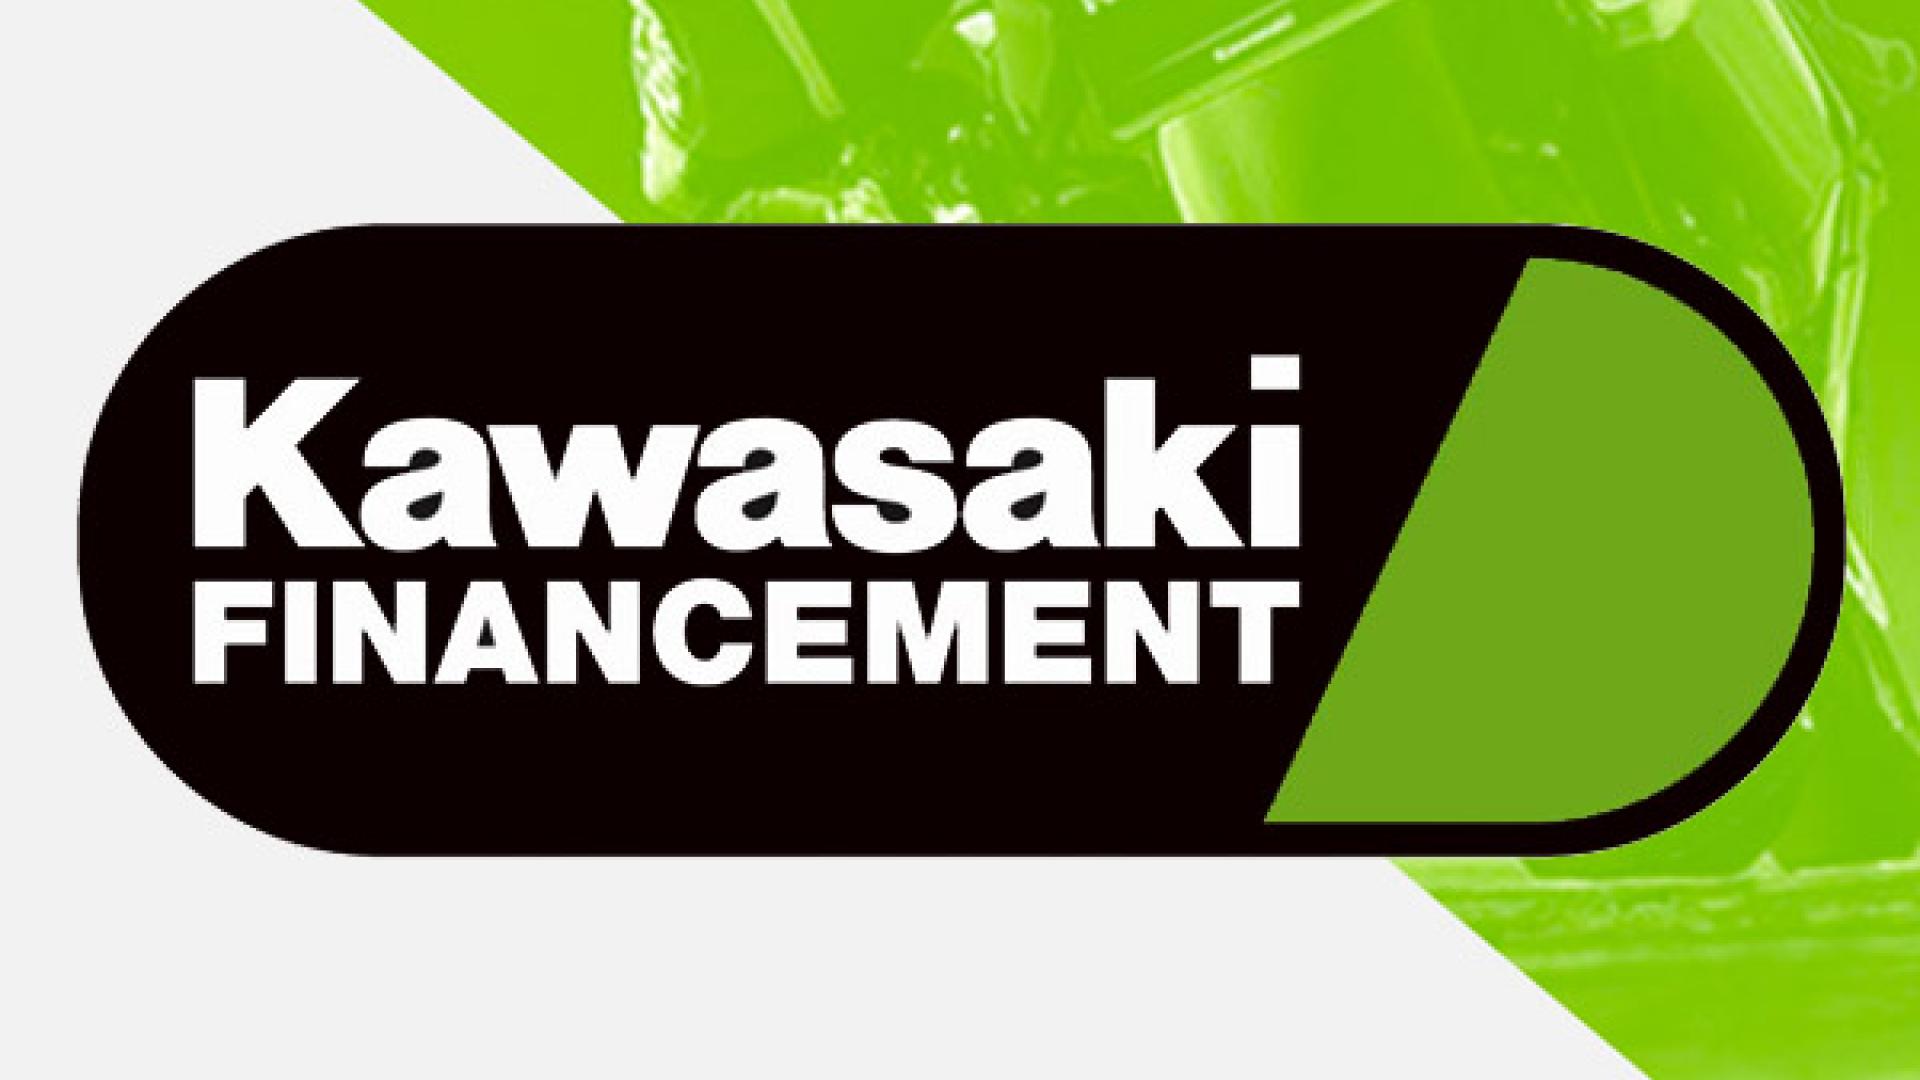 Kawasaki financement Chateauroux